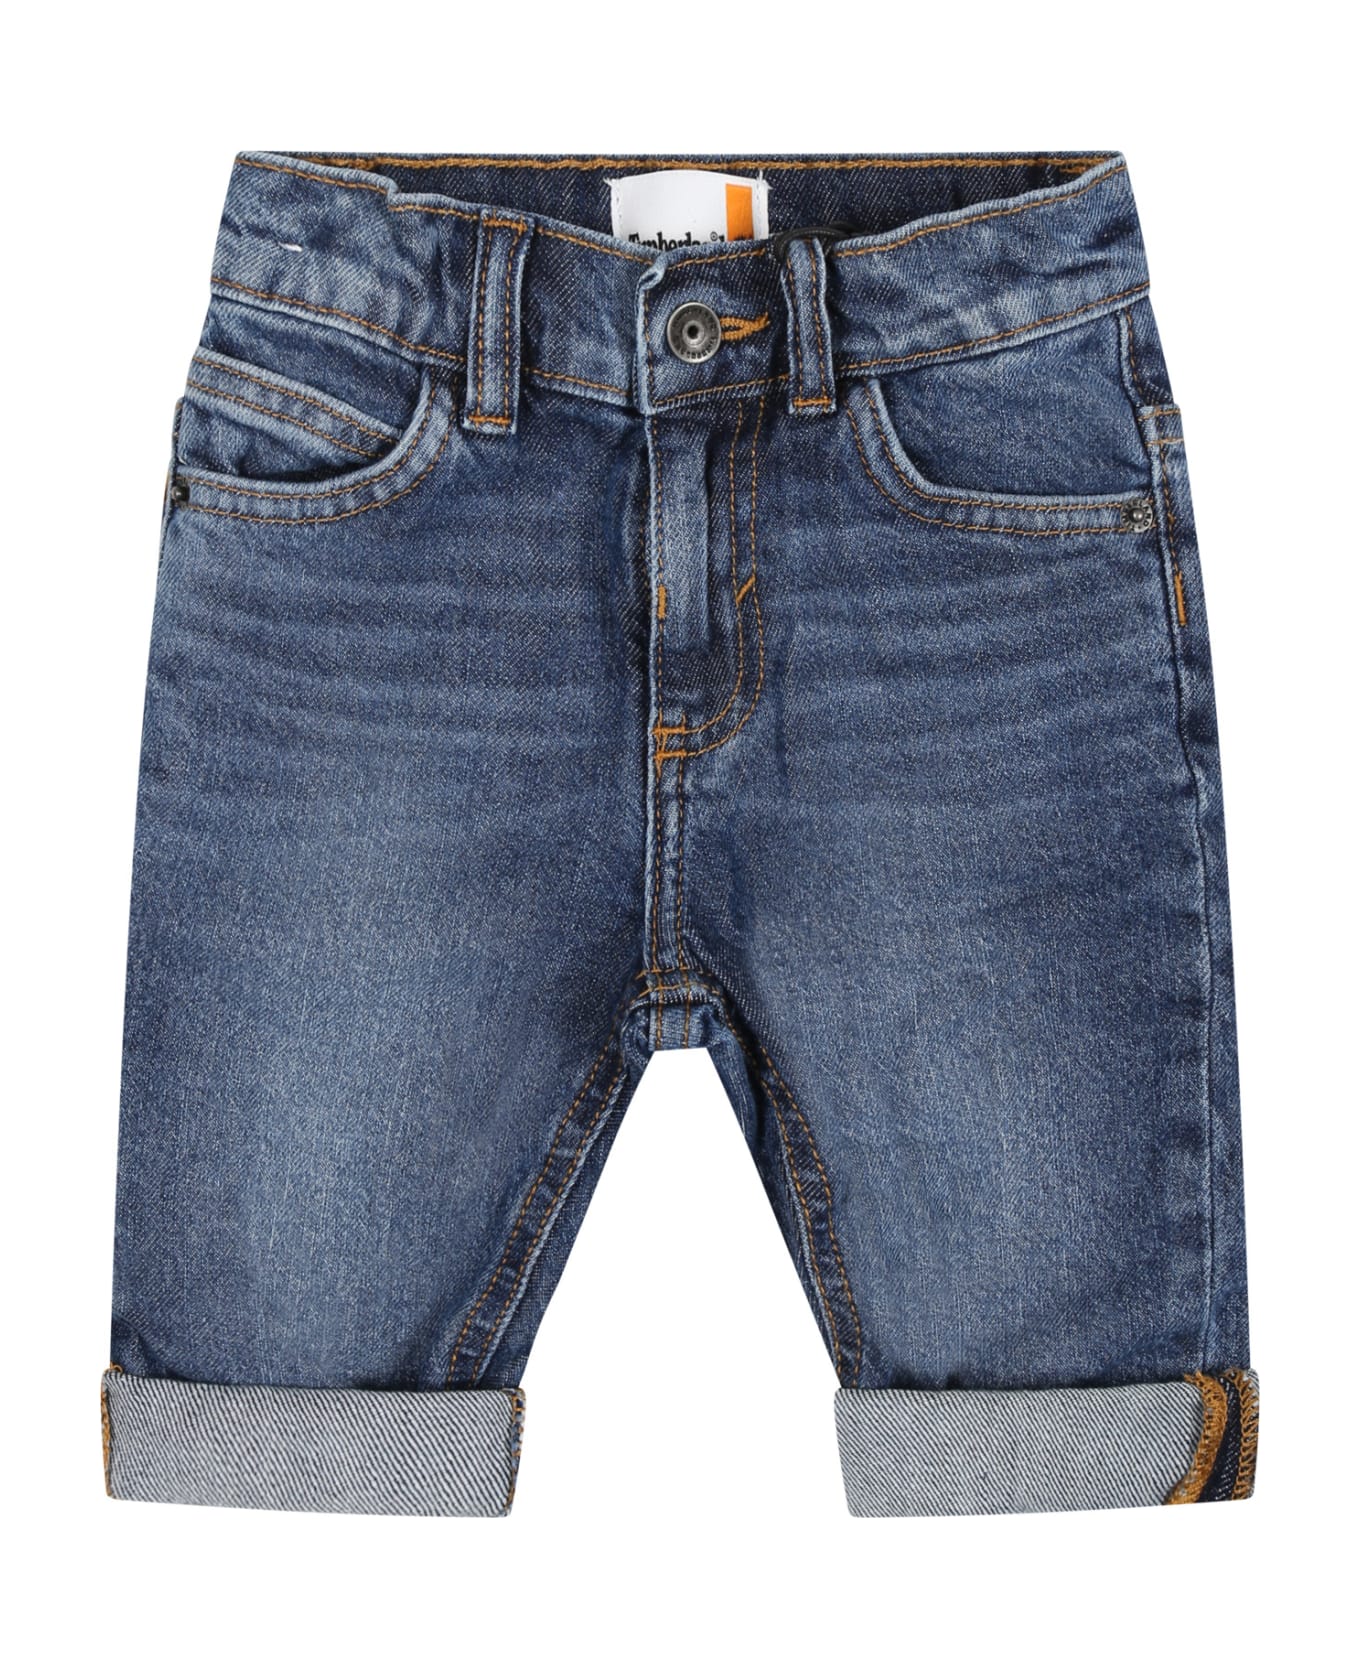 Timberland Denim Jeans For Baby Boy With Logo - Denim